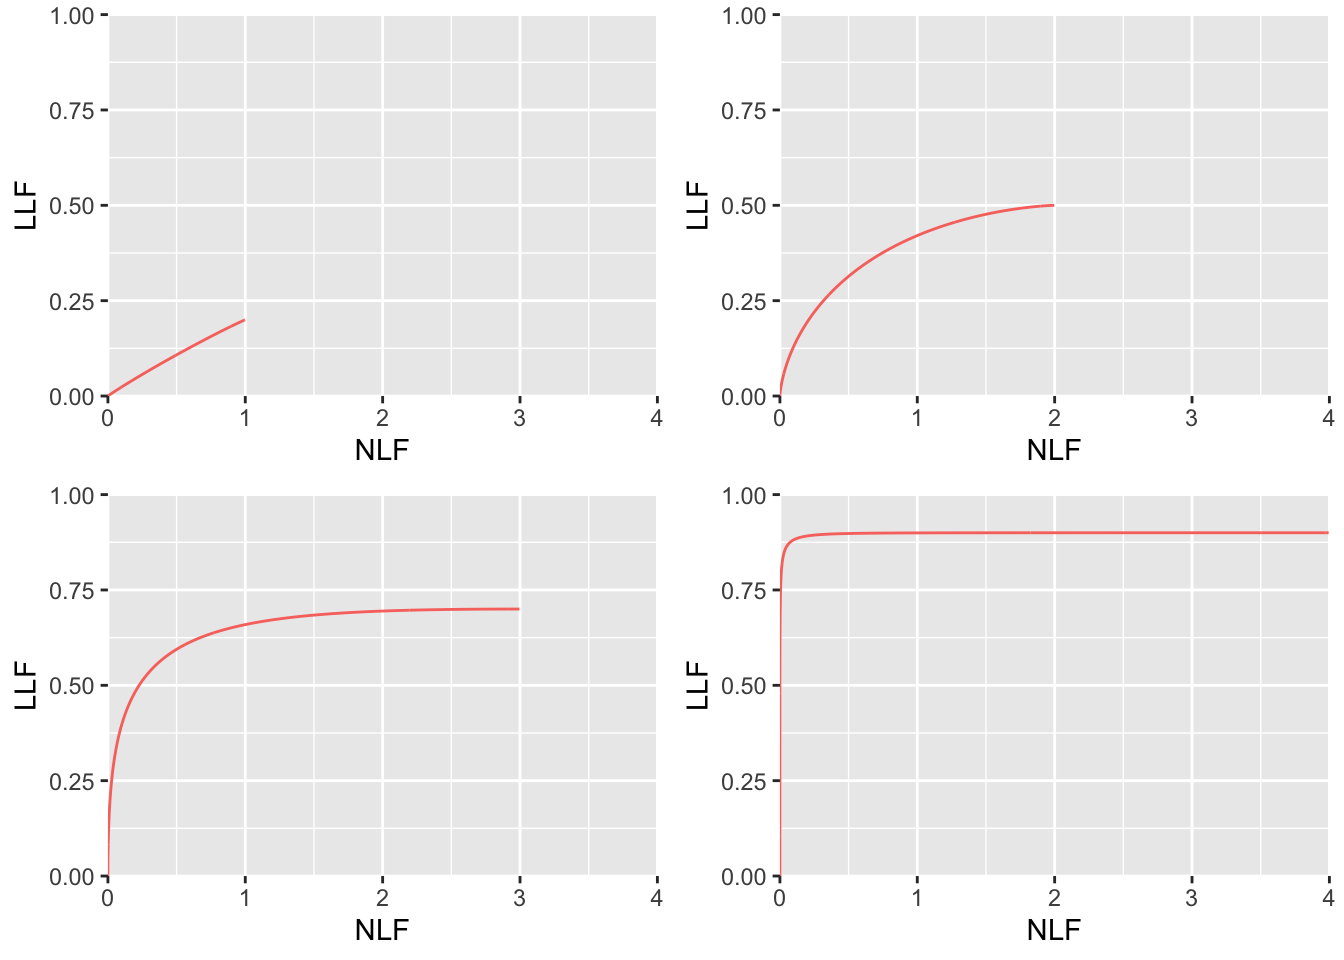 RSM-predicted FROC curves using $\lambda, \nu$ paramterization. Top left: $\mu = 0.1$, $\lambda = 1$ and $\nu = 0.2$. Top right: $\mu = 1$, $\lambda = 2$ and $\nu = 0.5$. Bottom left: $\mu = 2$, $\lambda = 3$ and $\nu = 0.7$. Bottom right: $\mu = 4$, $\lambda = 4$ and $\nu = 0.9$. The top-left panel is an unrealistic prediction because of unrealistic parameters $\lambda =1, \nu = 0.2$ for small $\mu$.